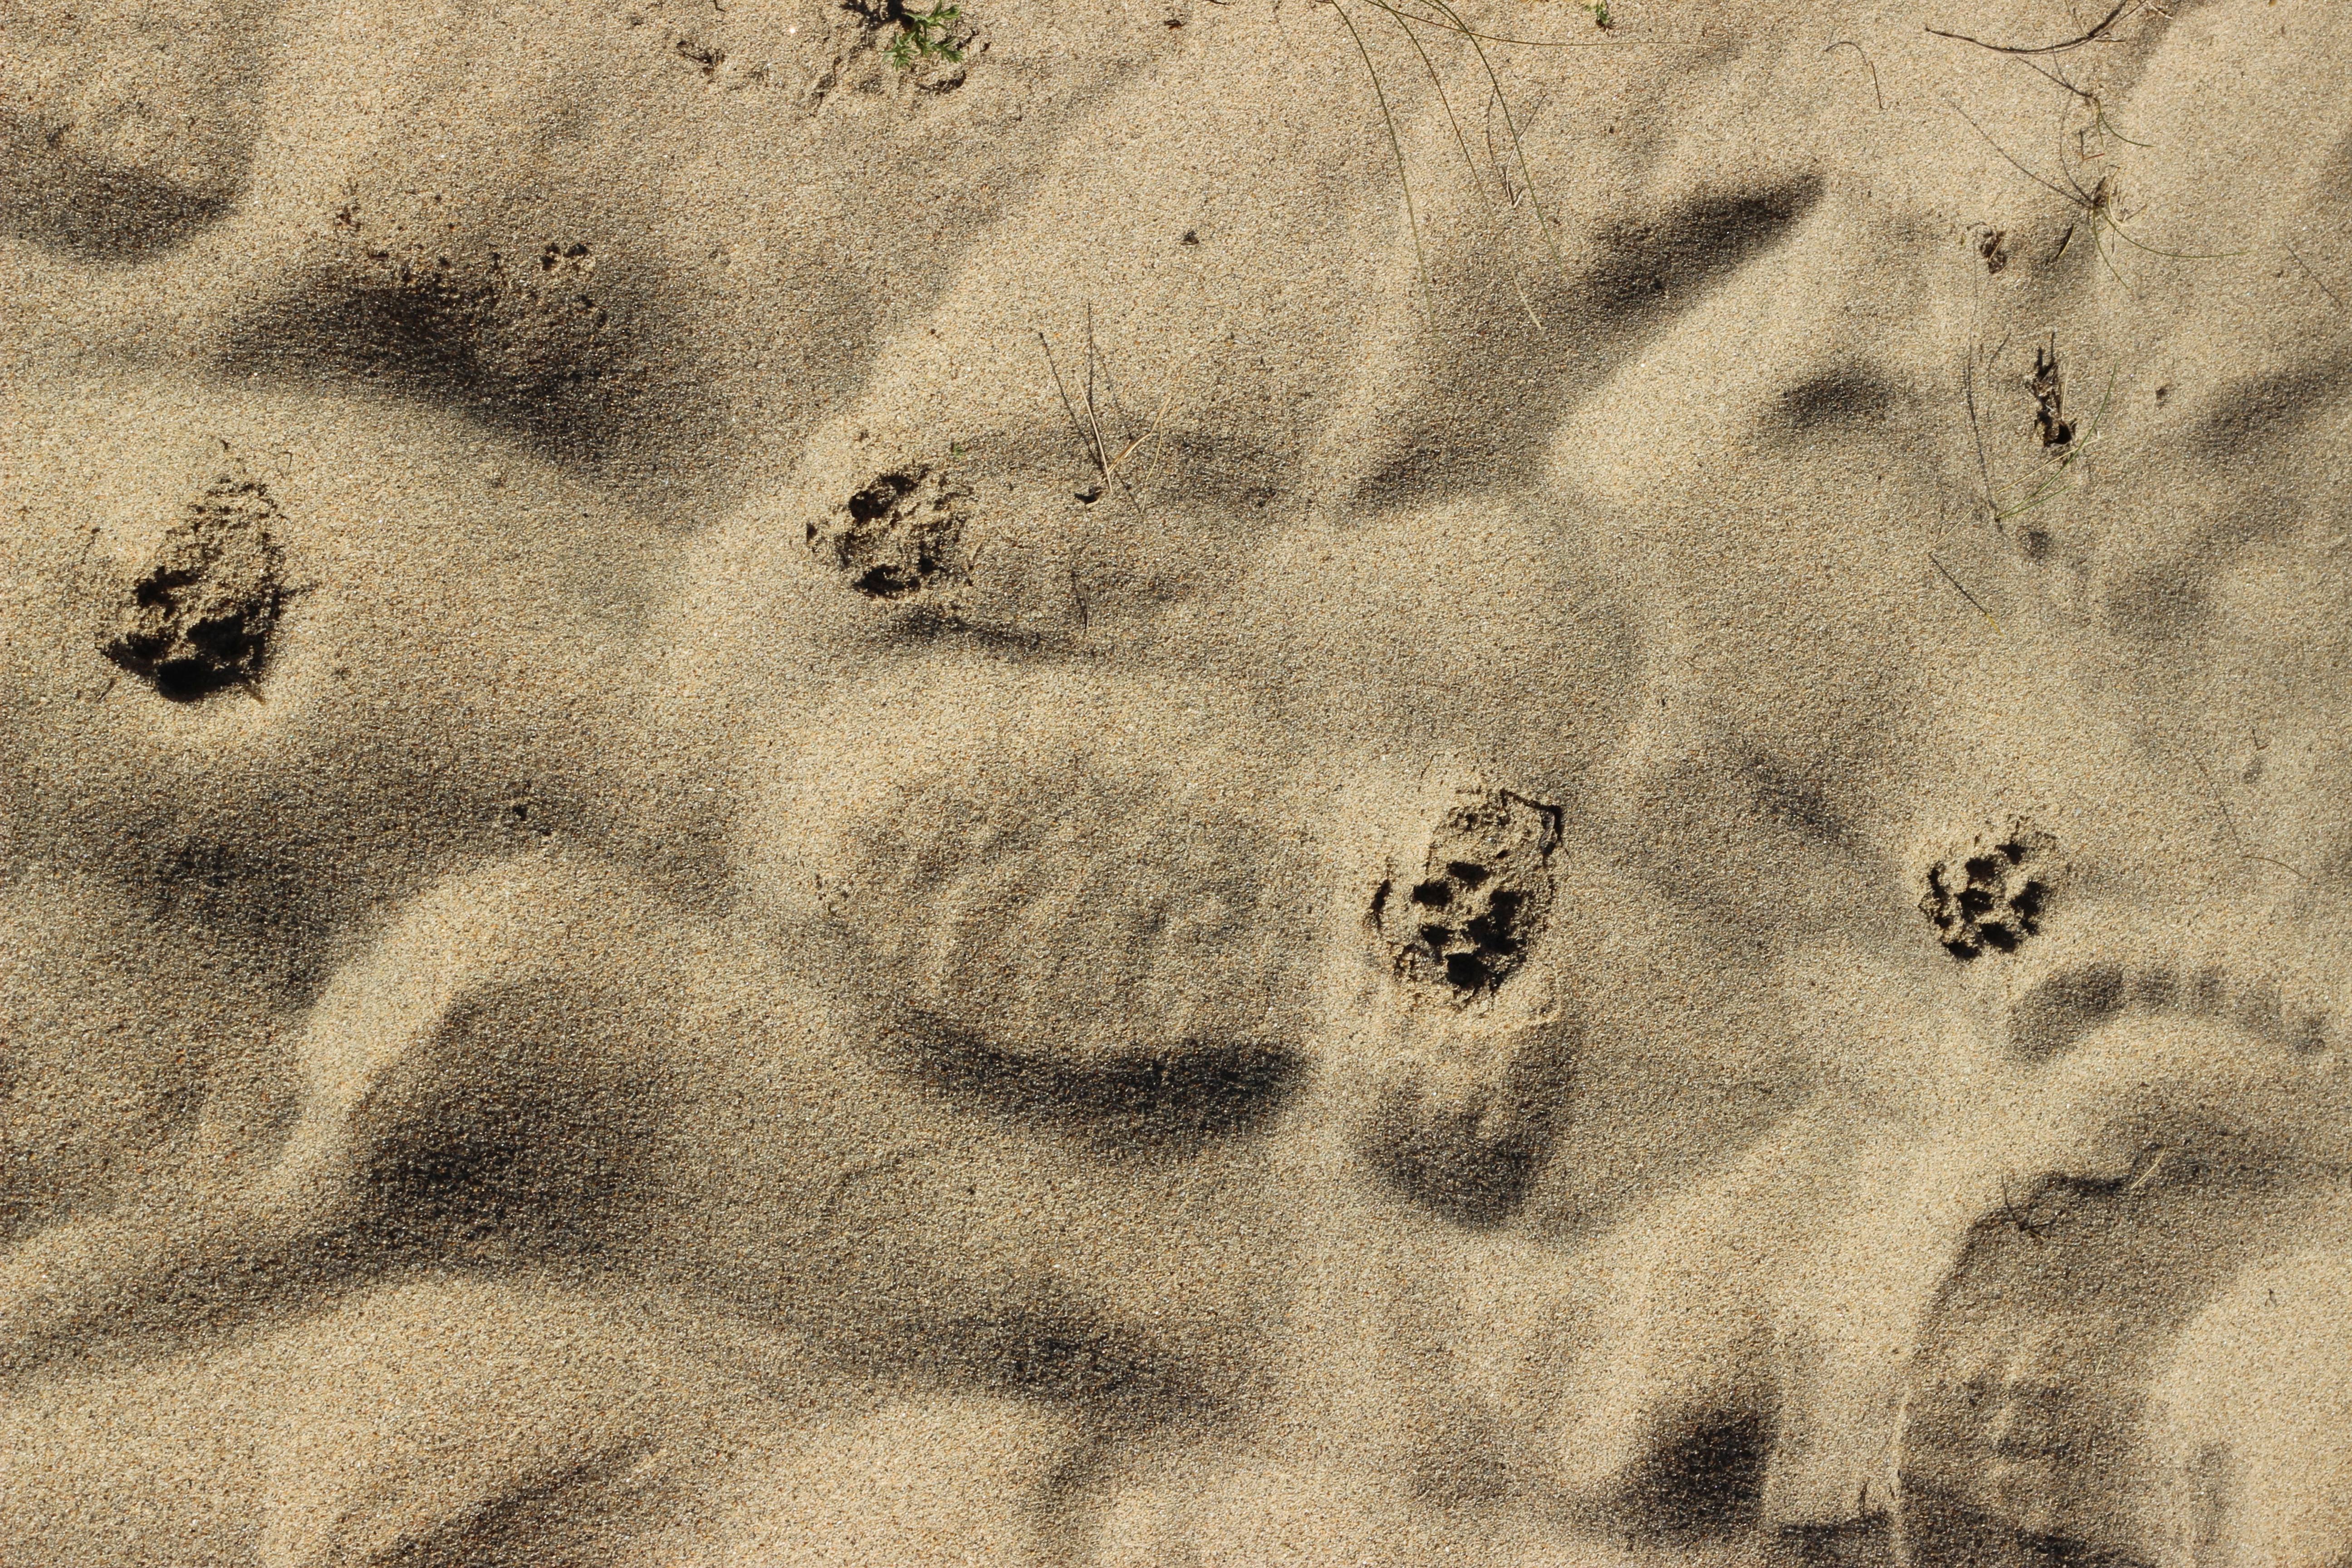 tracks in sand